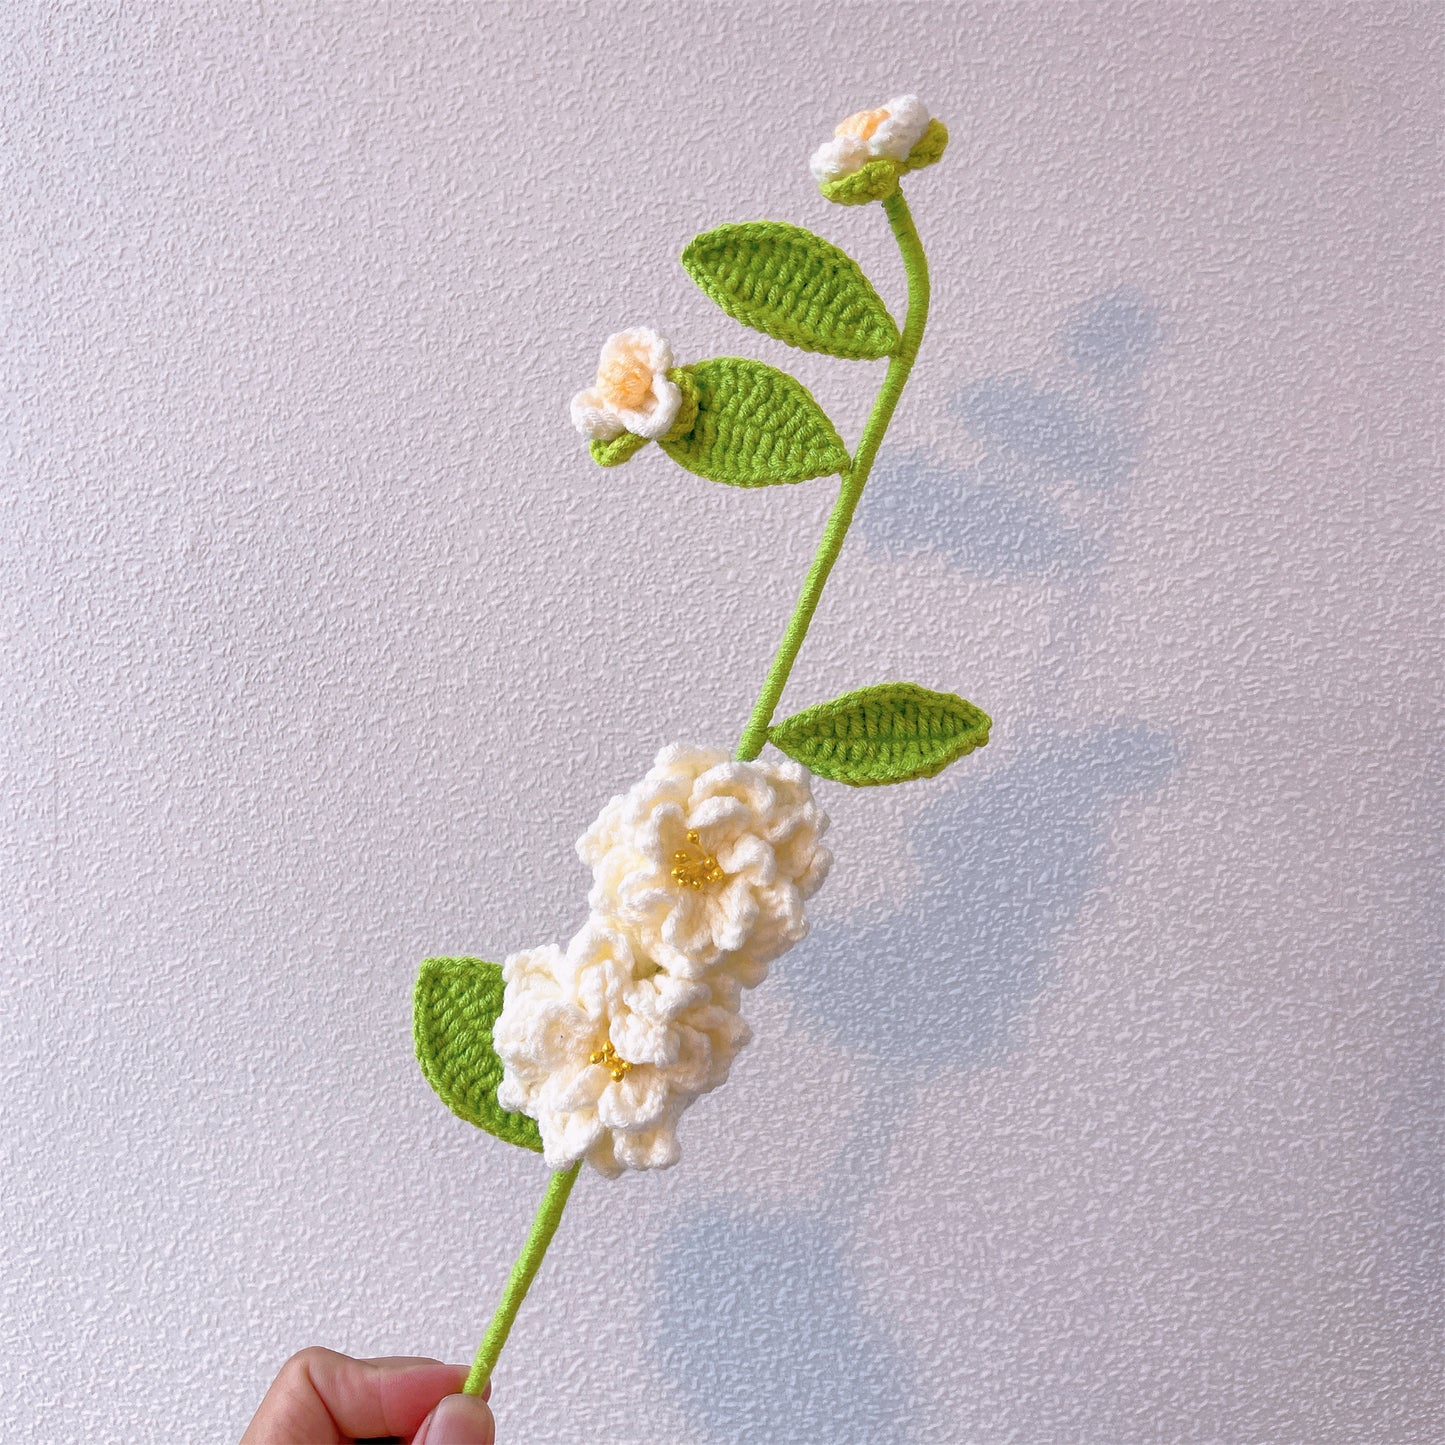 Elegant Beauty: Handcrafted Crochet Gardenias Stake for a Sophisticated Garden Decor